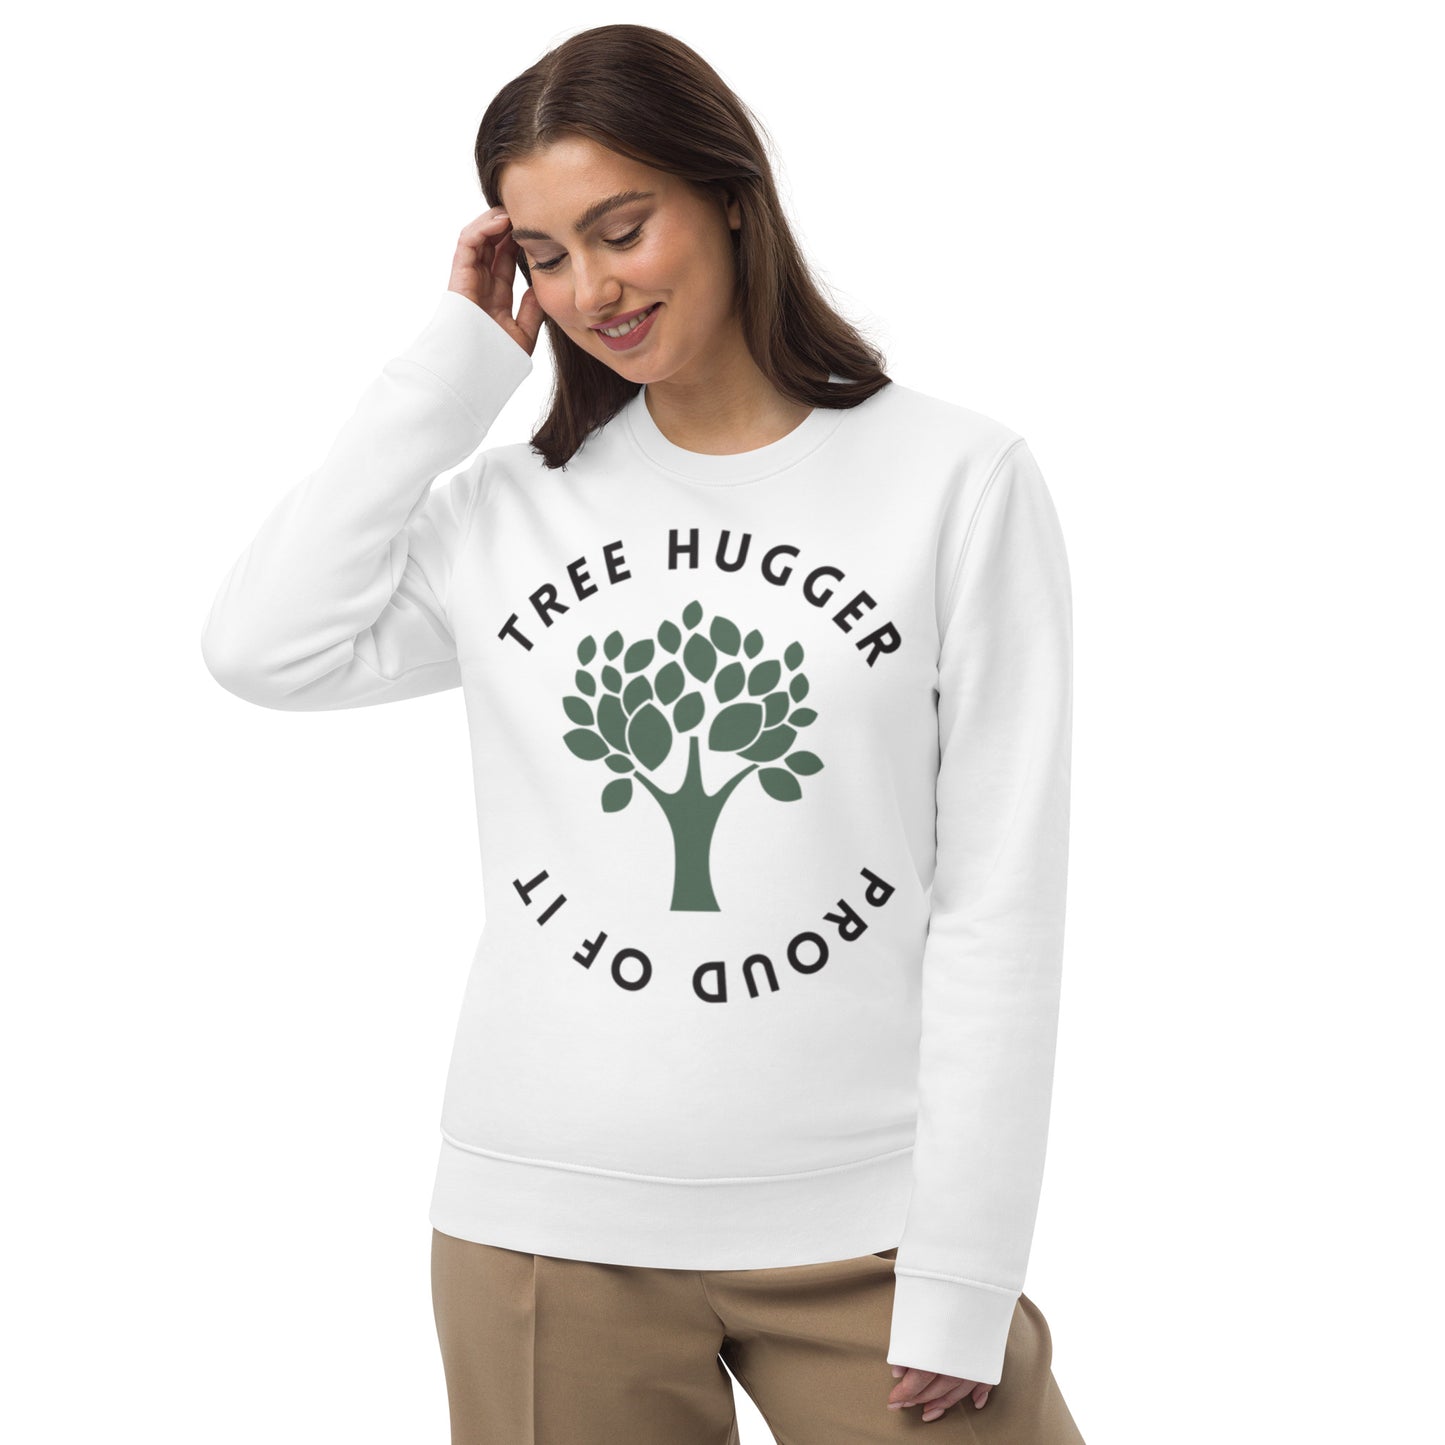 TREE HUGGER and Proud of It - Eco-friendly Sweatshirt